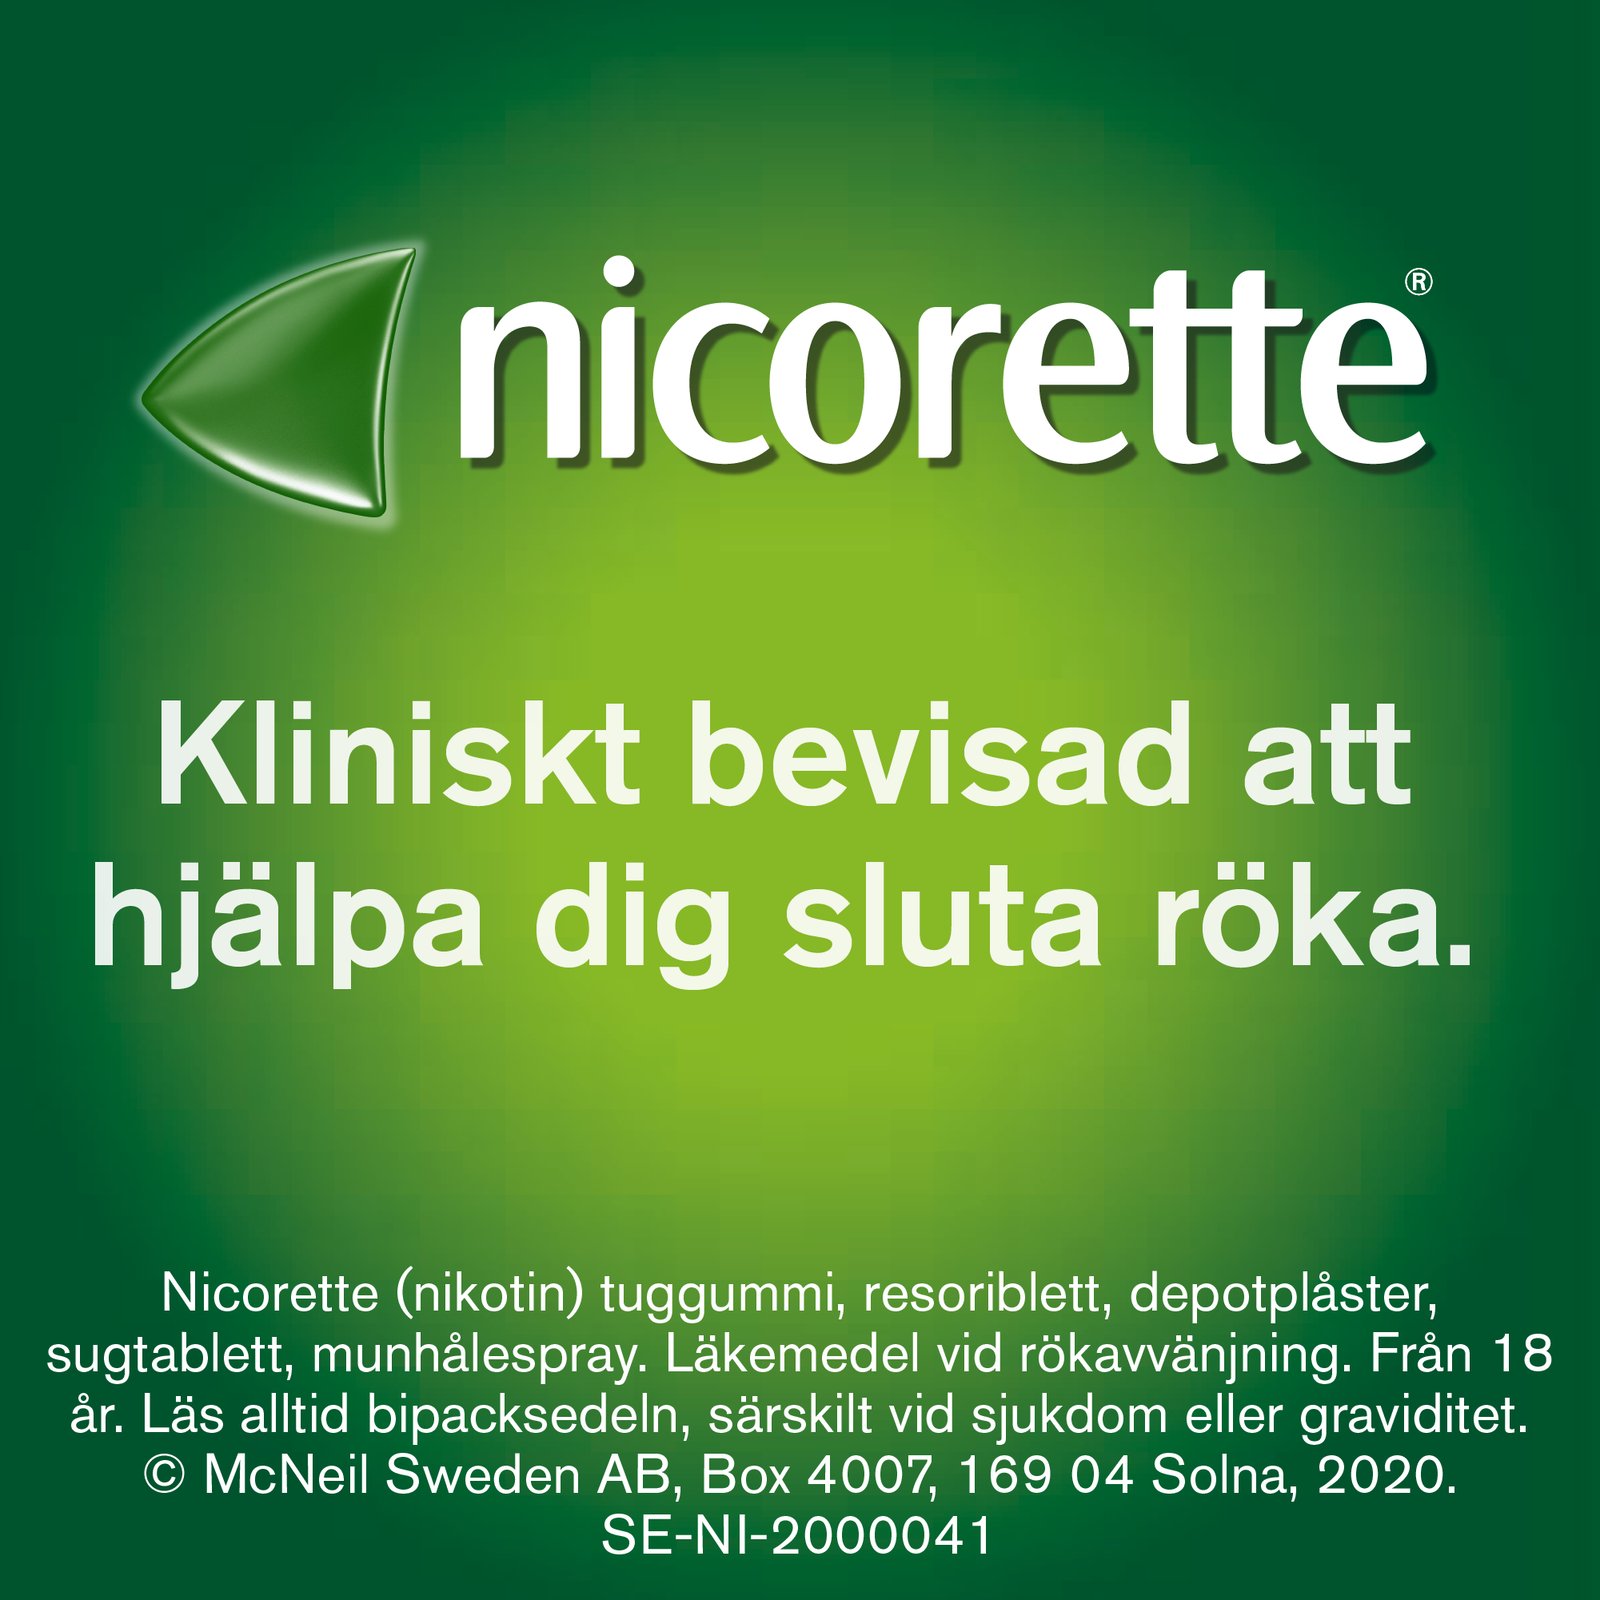 Nicorette Pepparmint Komprimerad Sugtablett 4 mg 160 st